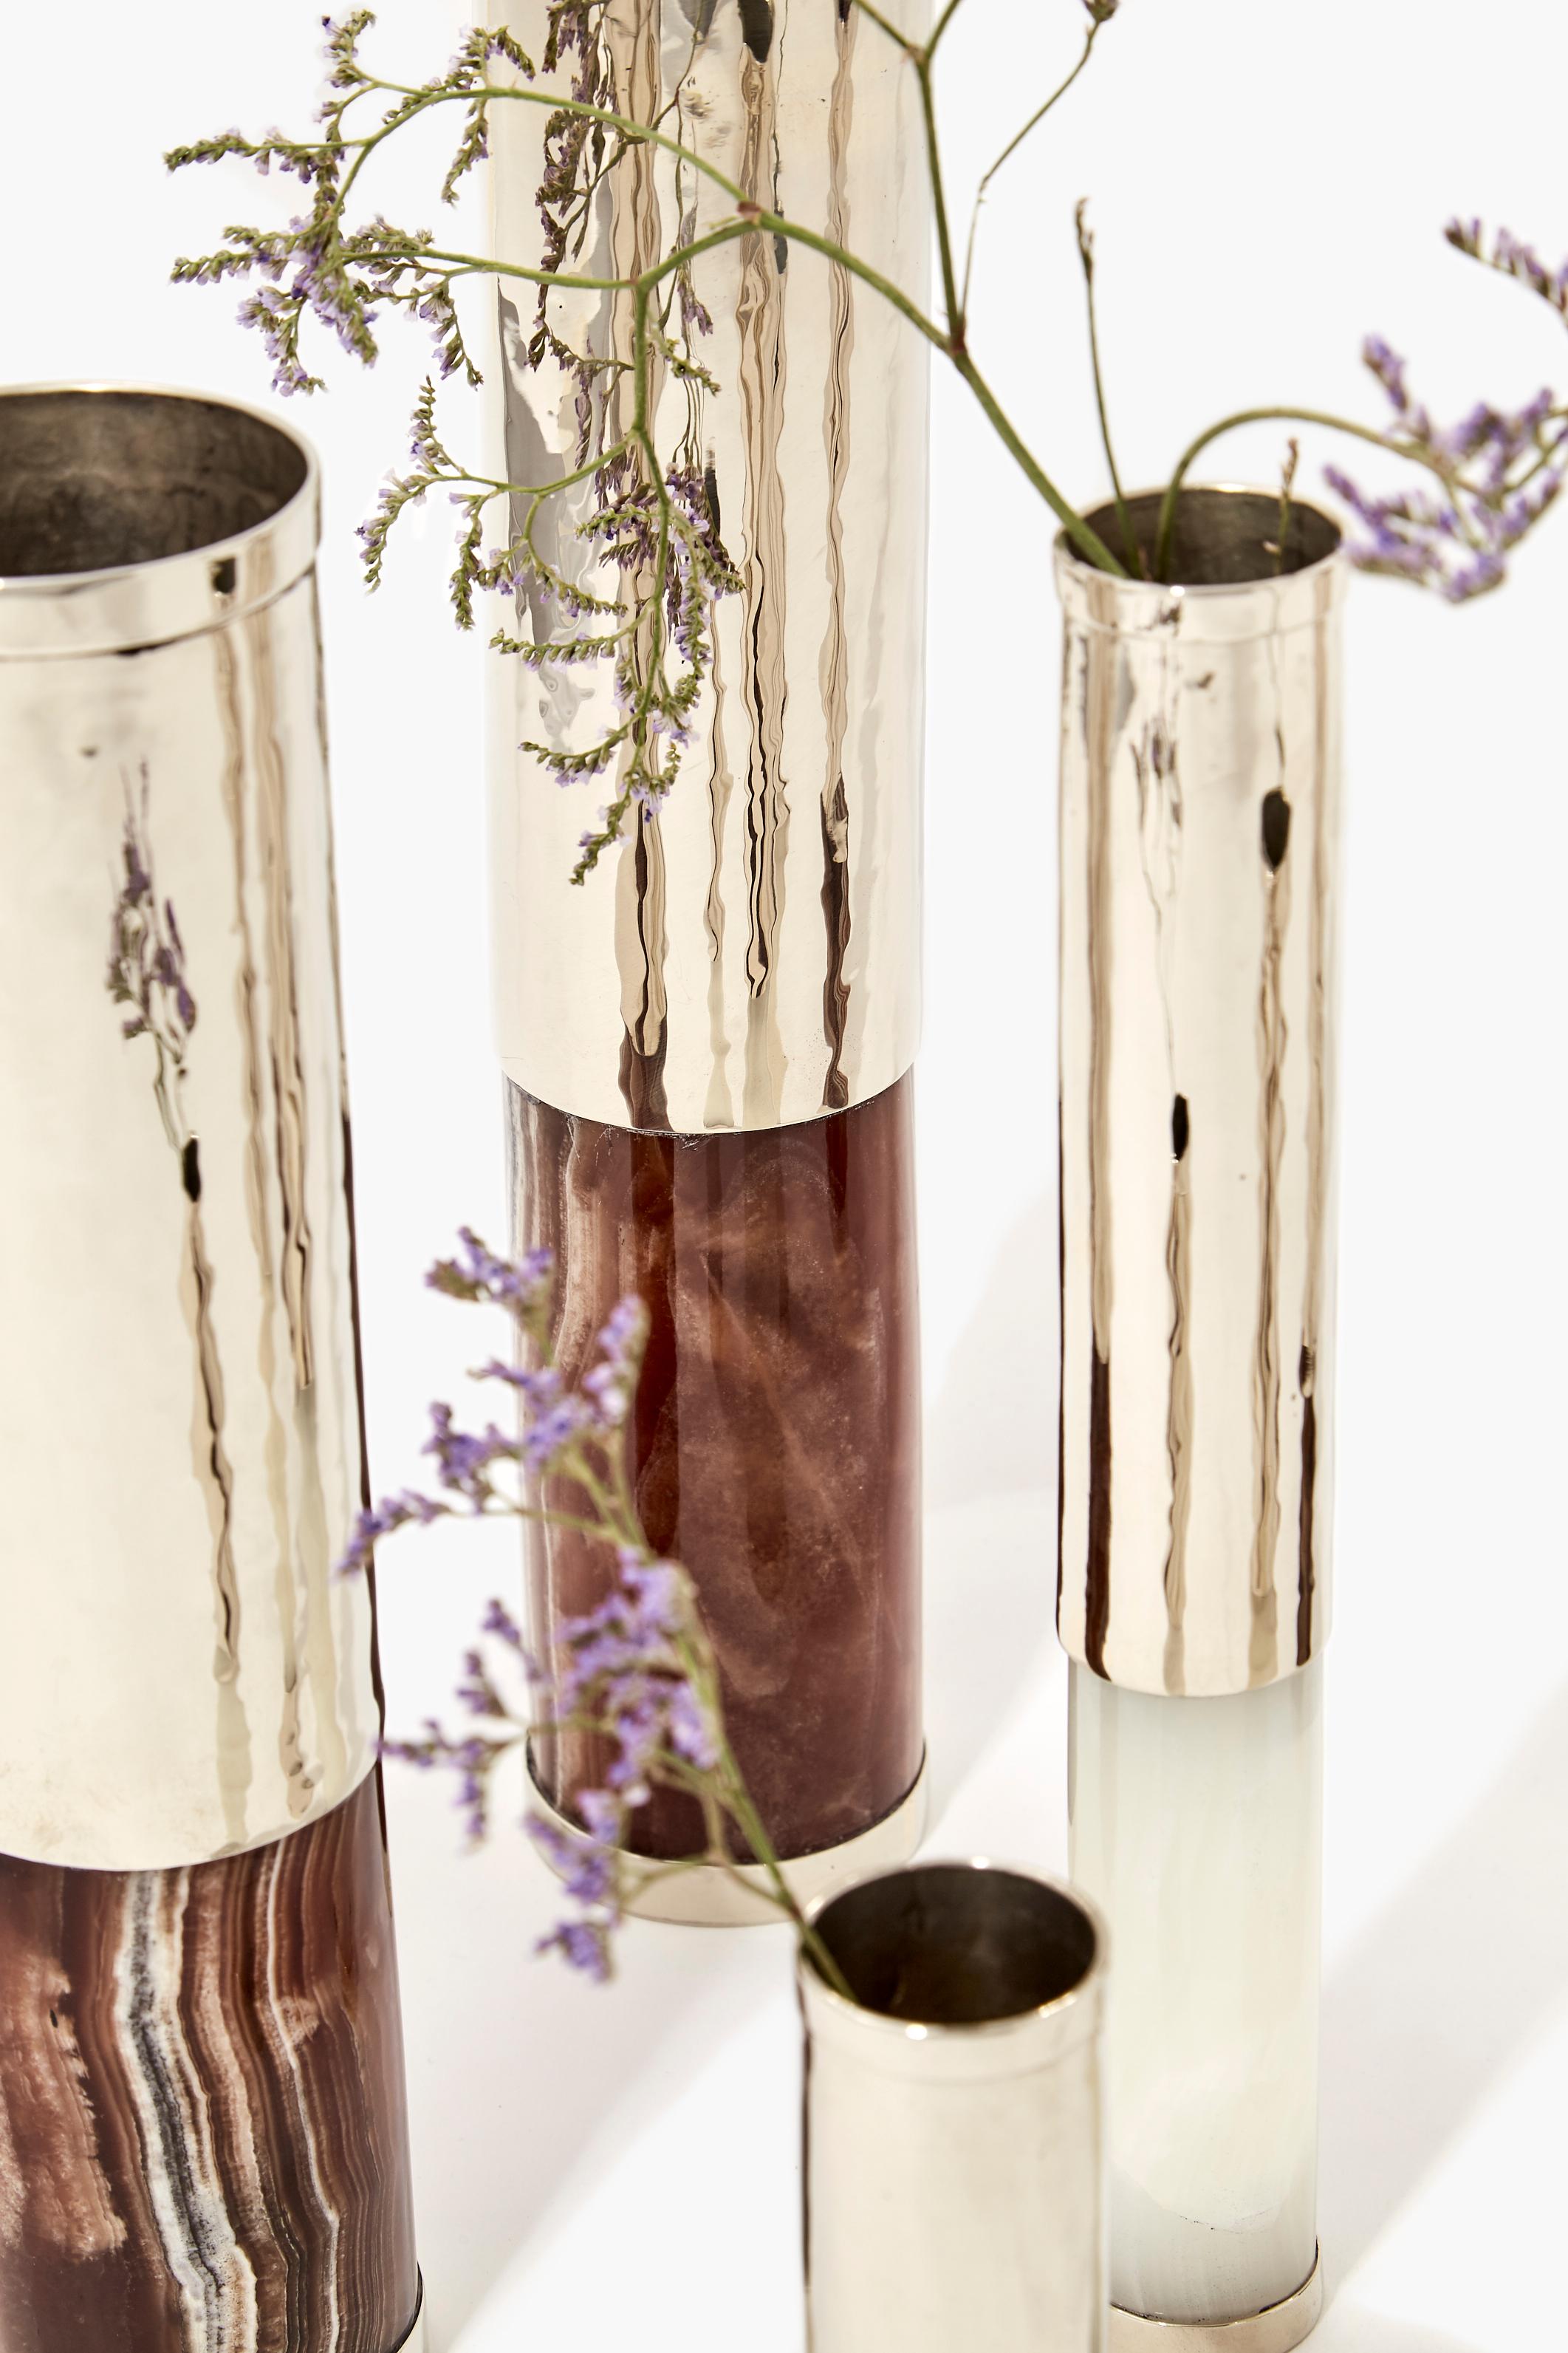 Hand-Crafted Salta Tube Set Flower Vases, Alpaca Silver & Cream Onyx Stone For Sale